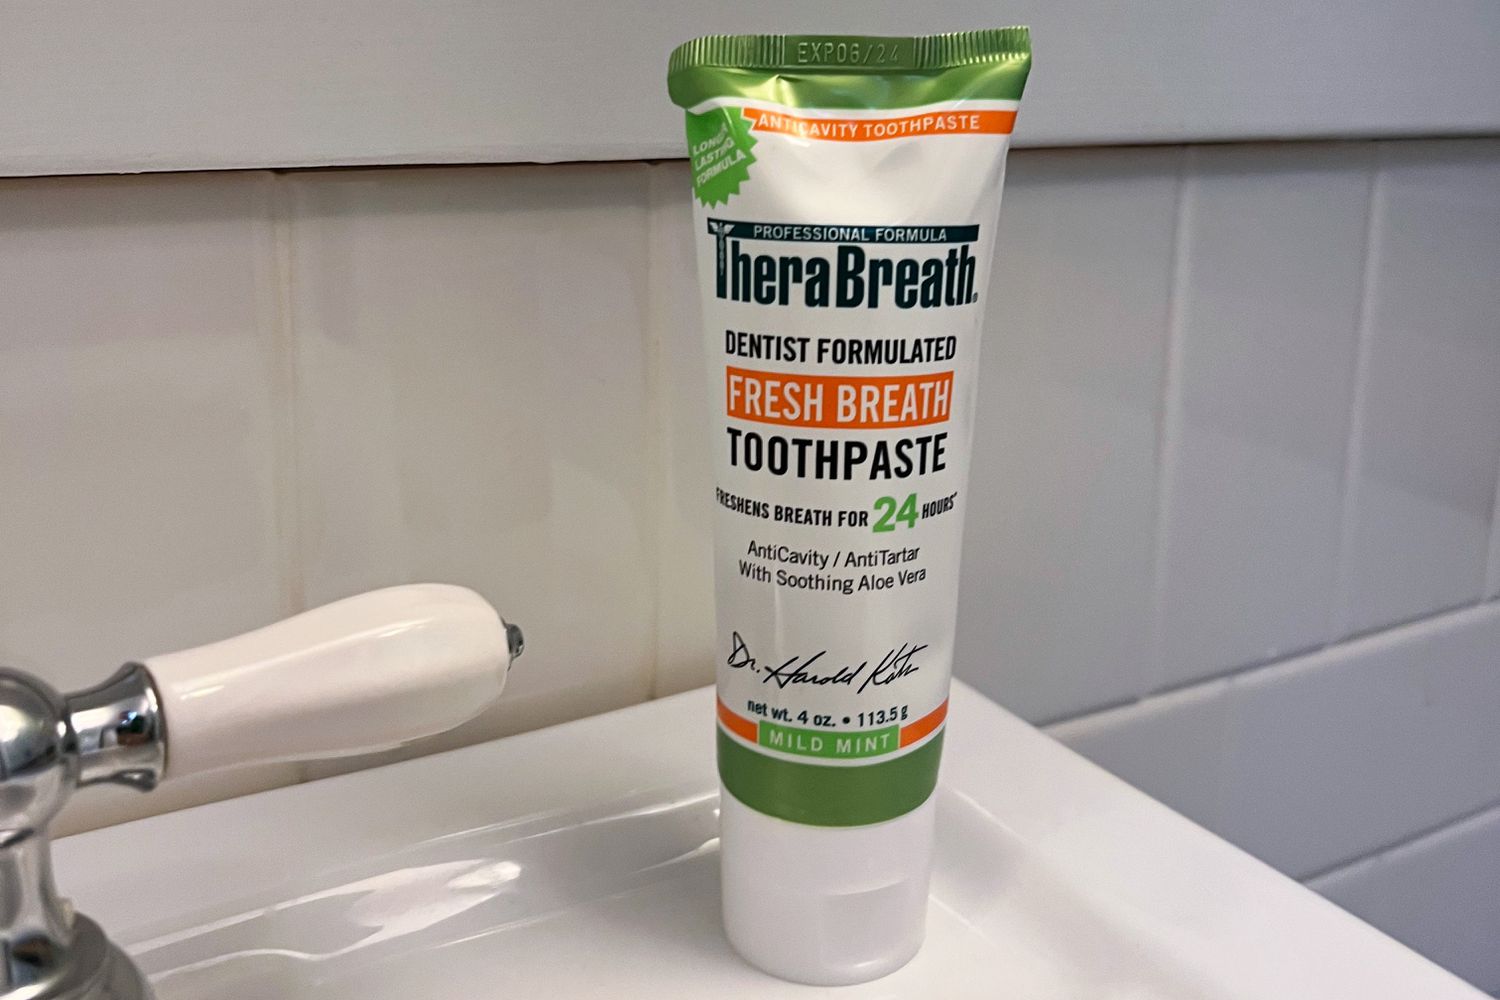 TheraBreath Fresh Breath Toothpaste tube on a sink